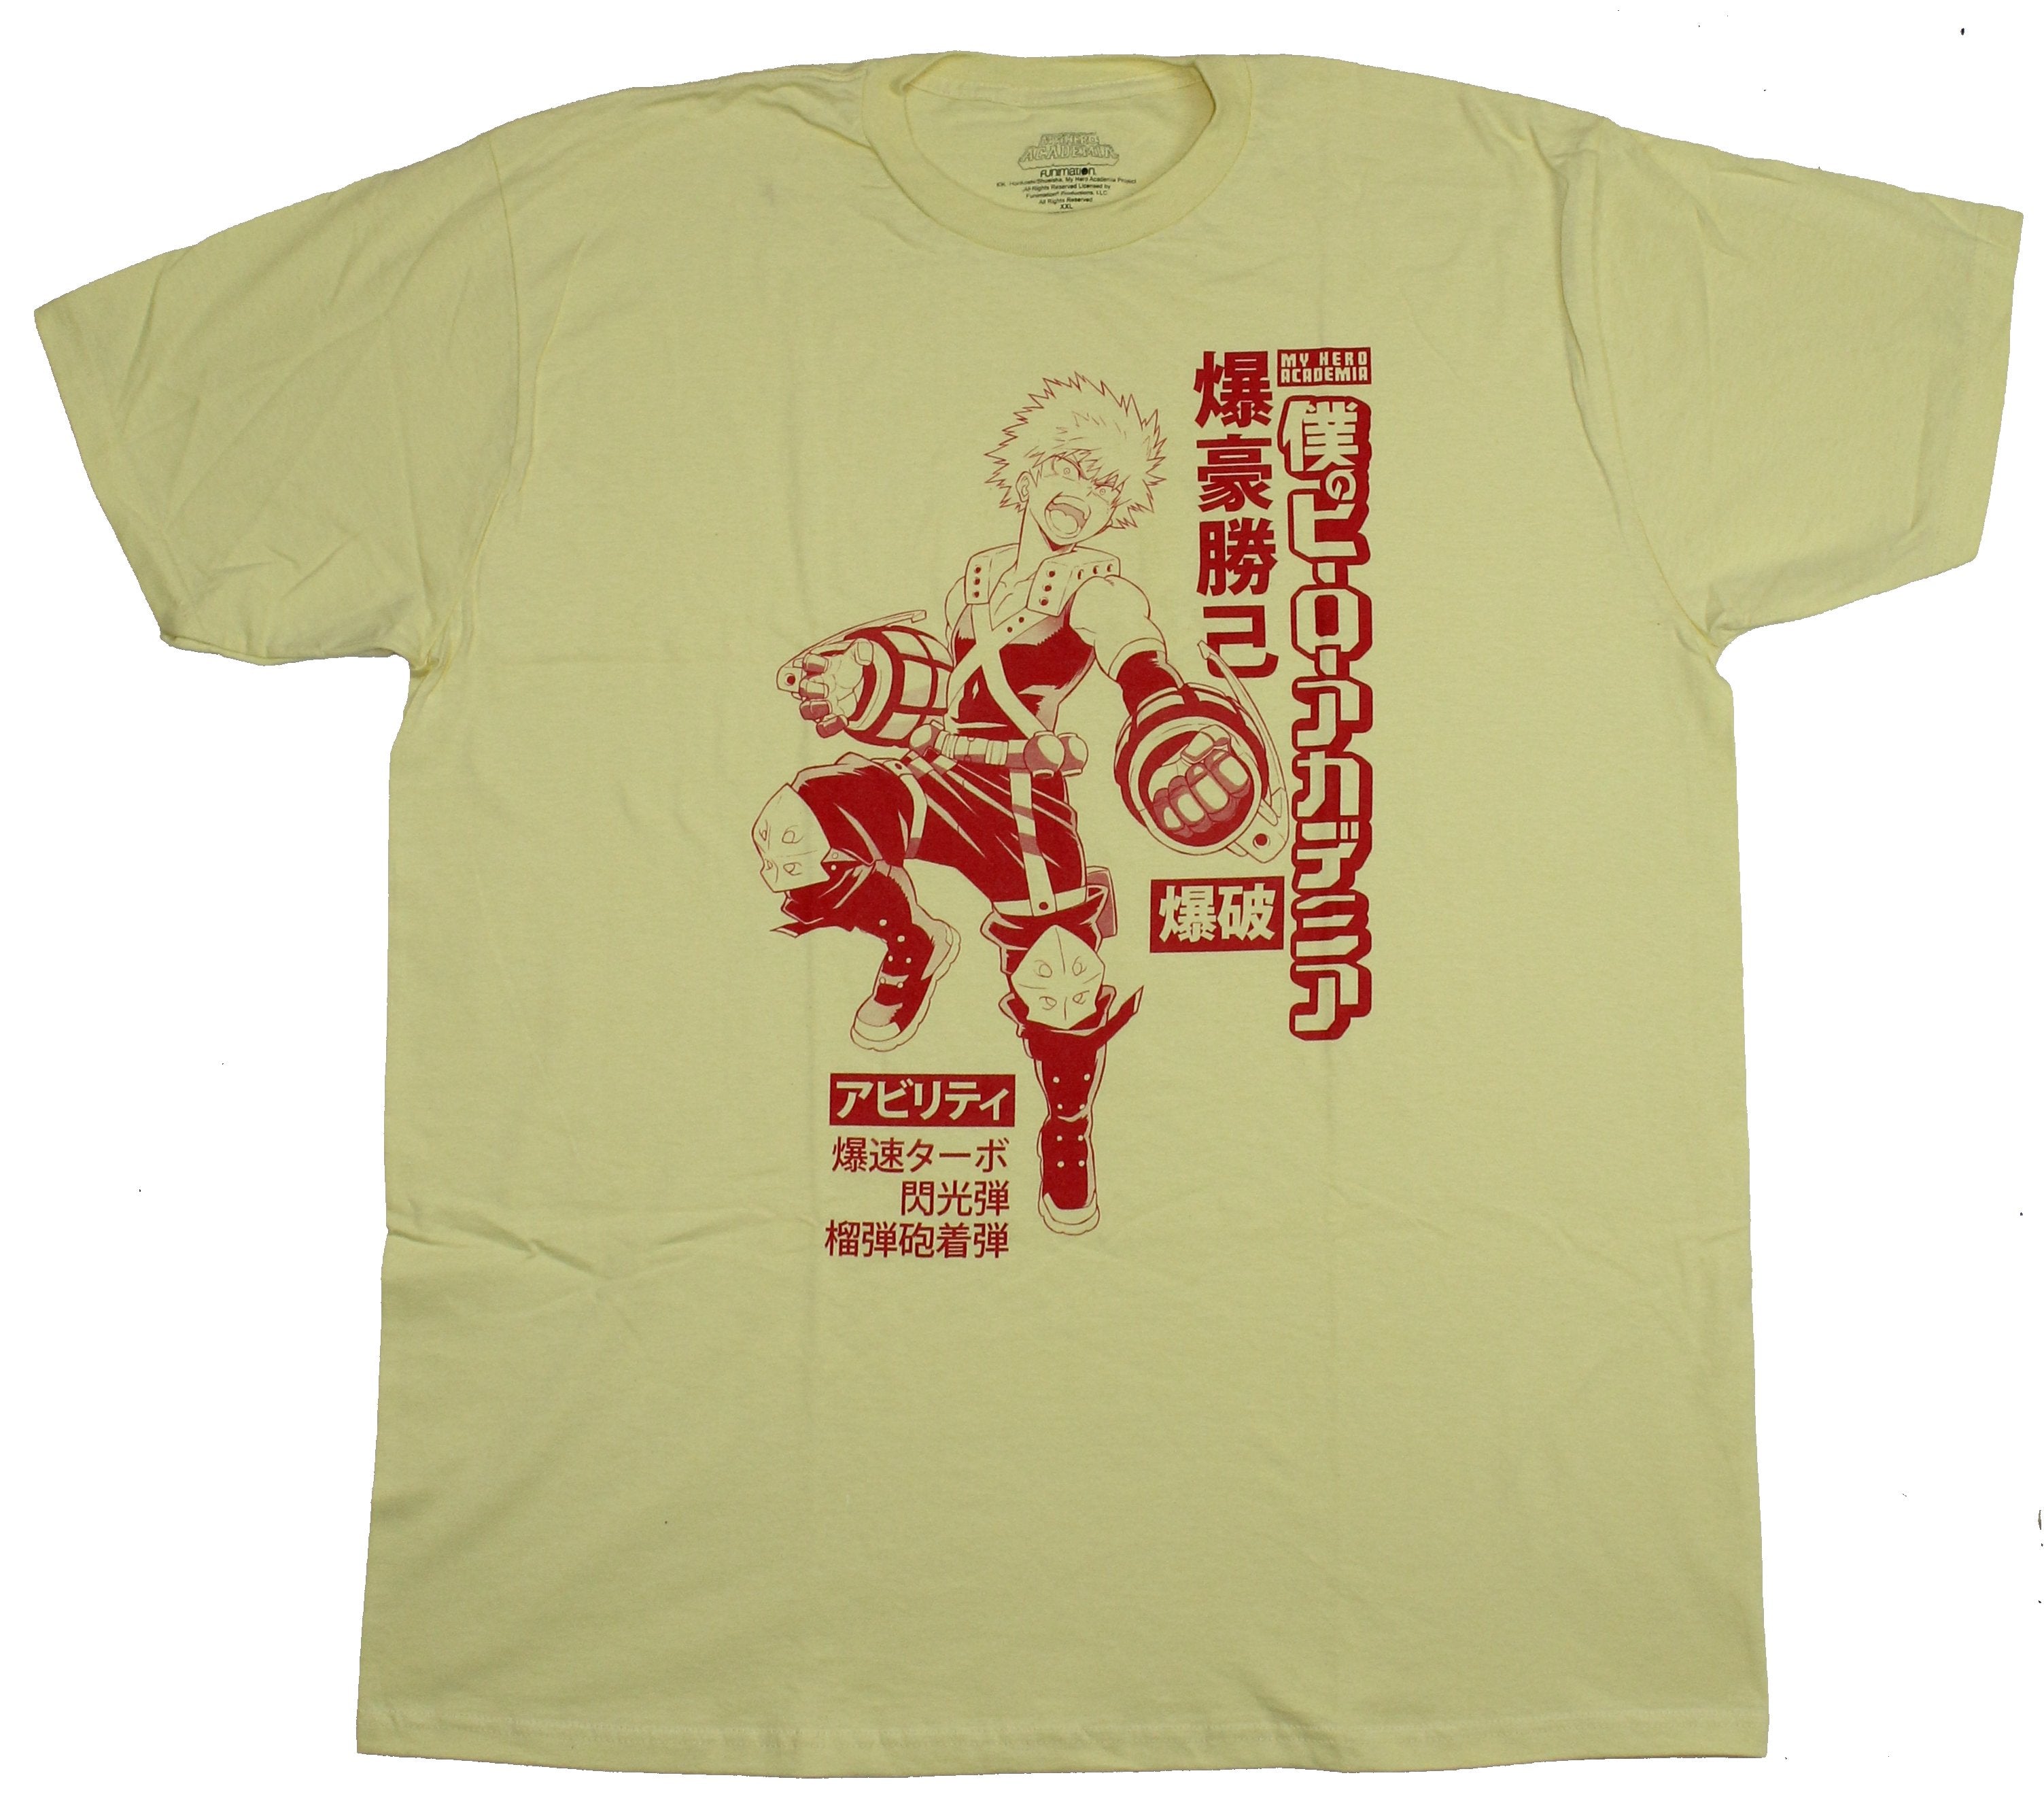 My Hero Academia Mens T-Shirt - Bakugou Ready To Fight Red Print Image